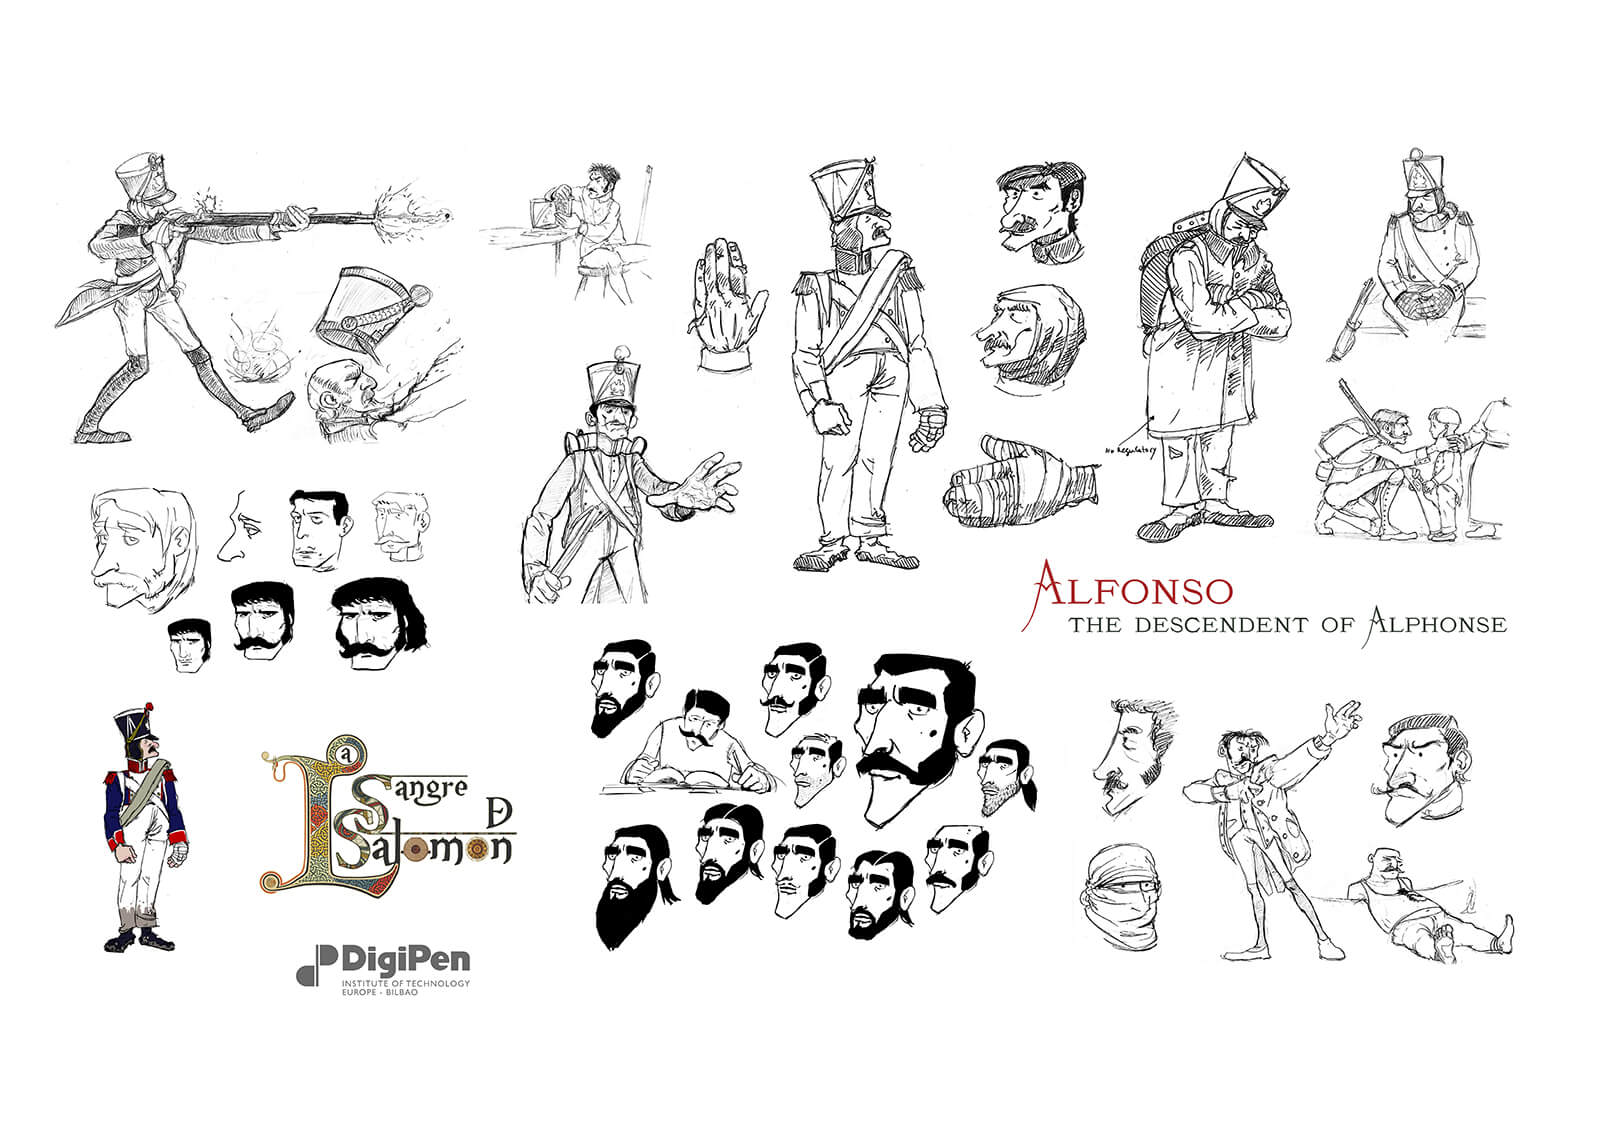 Concept drawings of Alfonso, the descendent of Alphonse, from La Sangre de Salomon